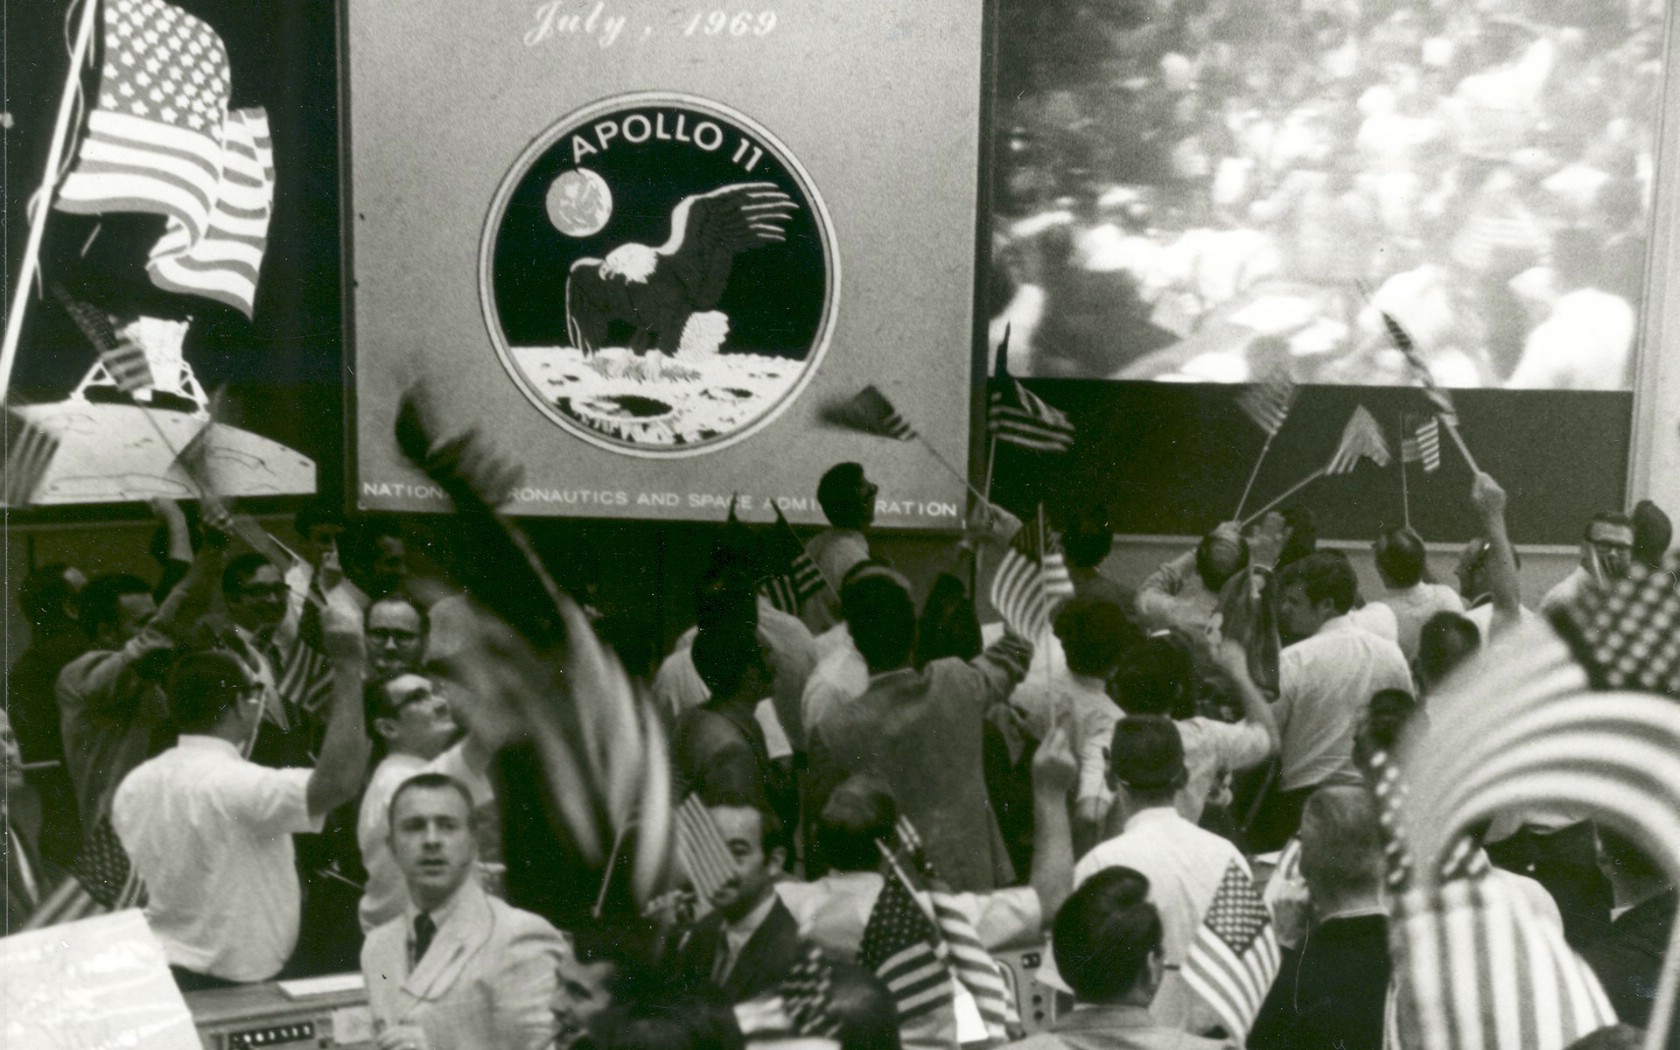 壁纸1680x1050One Giant Leap for Mankind  Mission Control Celebrates After Conclusion of the Apollo 11 Lunar 登月任务结束后的欢庆壁纸 阿波罗11号登月40周年纪念壁纸壁纸 阿波罗11号登月40周年纪念壁纸图片 阿波罗11号登月40周年纪念壁纸素材 人文壁纸 人文图库 人文图片素材桌面壁纸